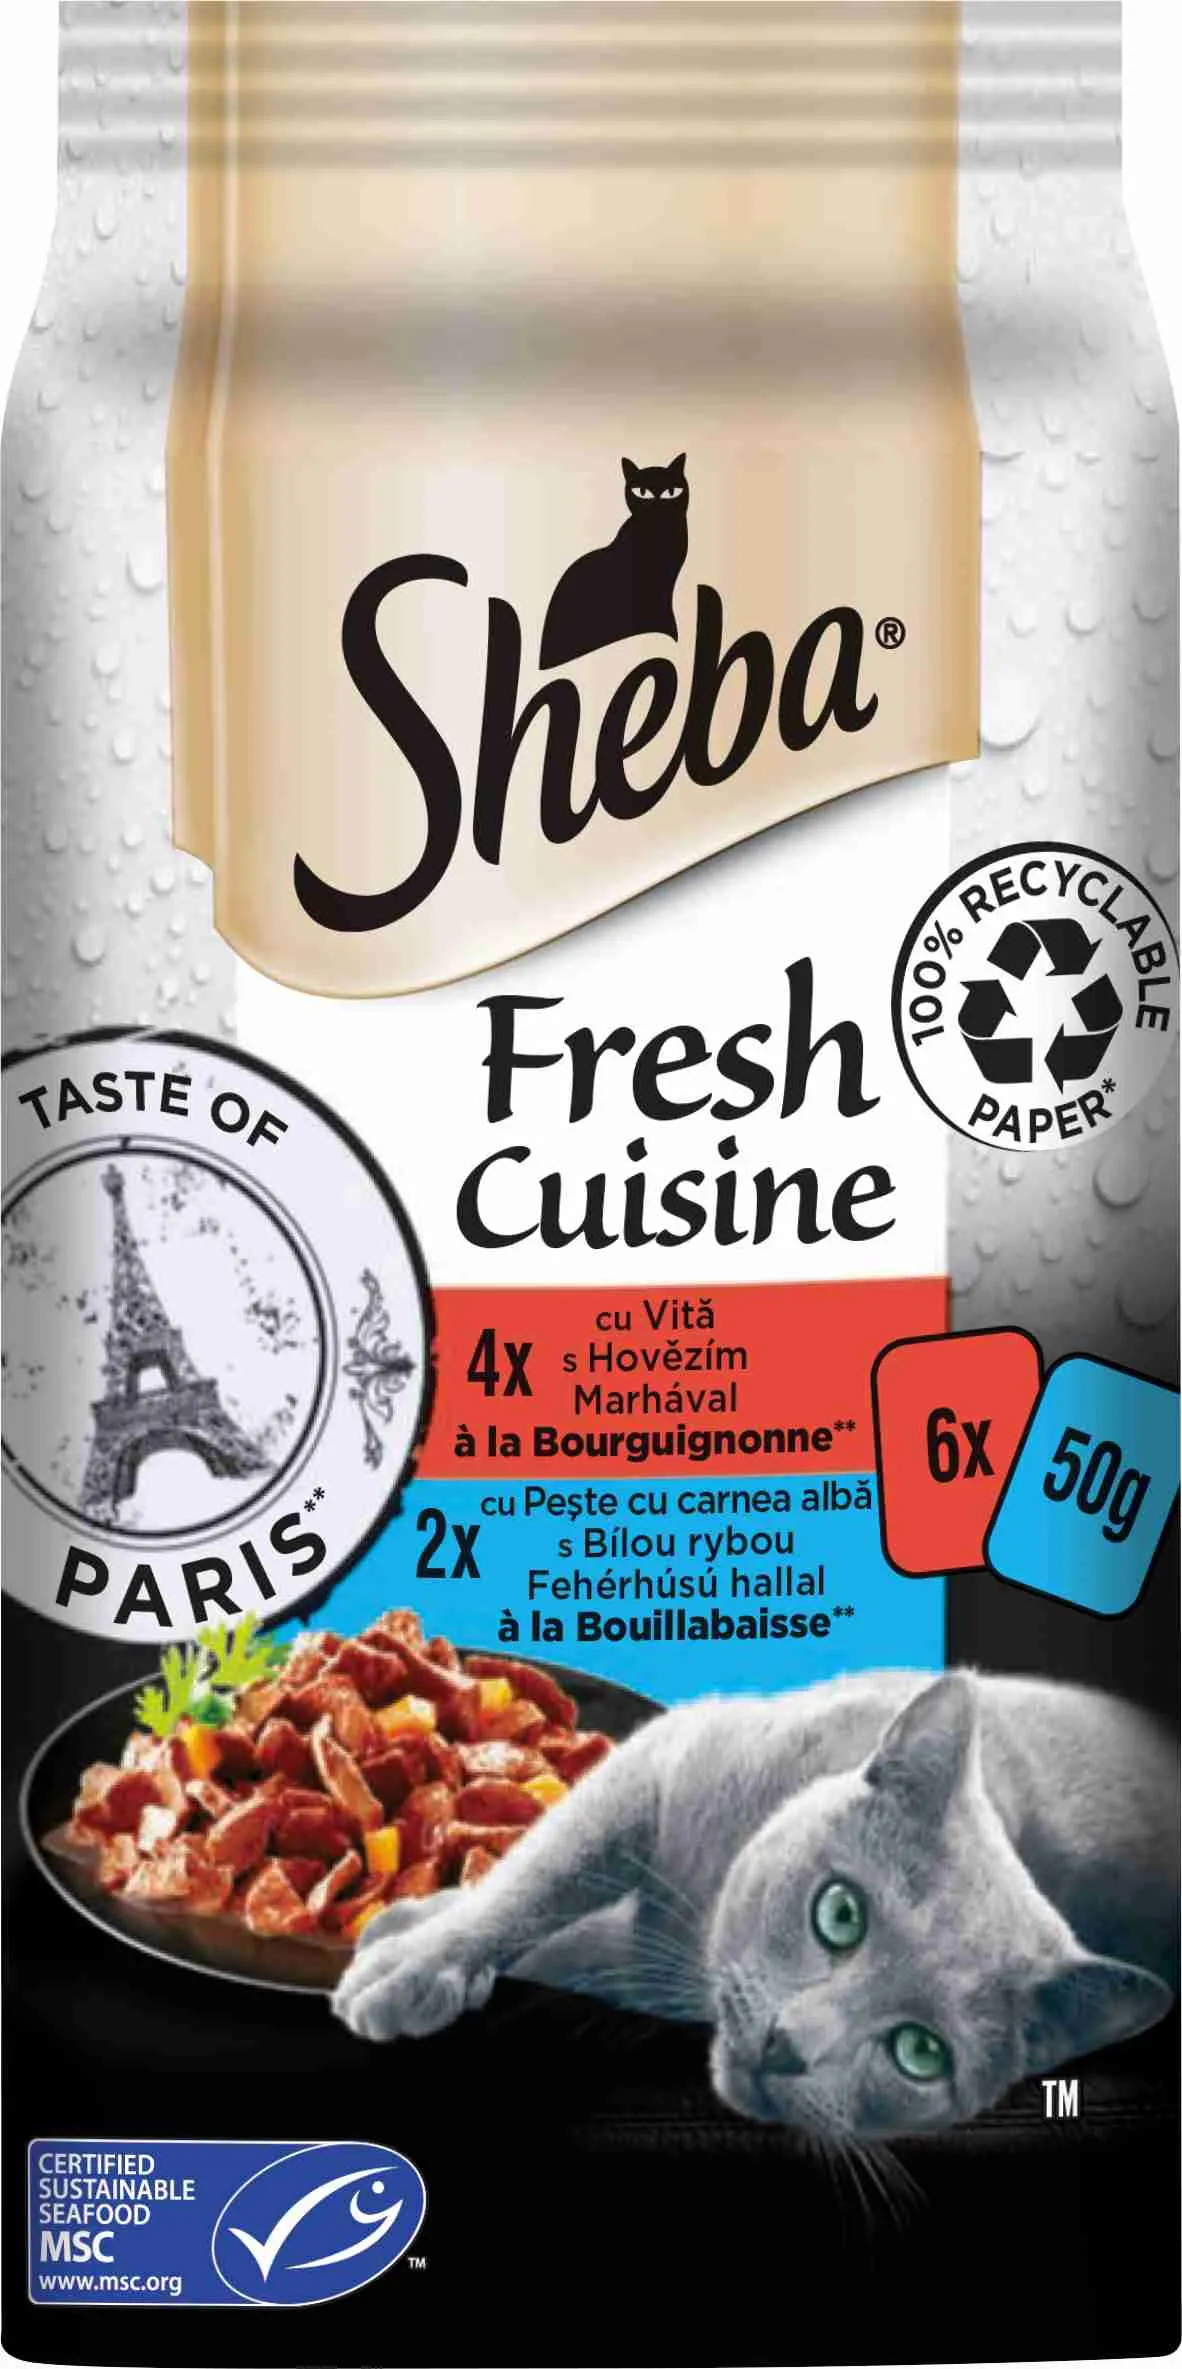 SHEBA Kapsička pre mačky Fresh Cuisine - Taste of Paris 1×6ks, kapsička Paris, 50g